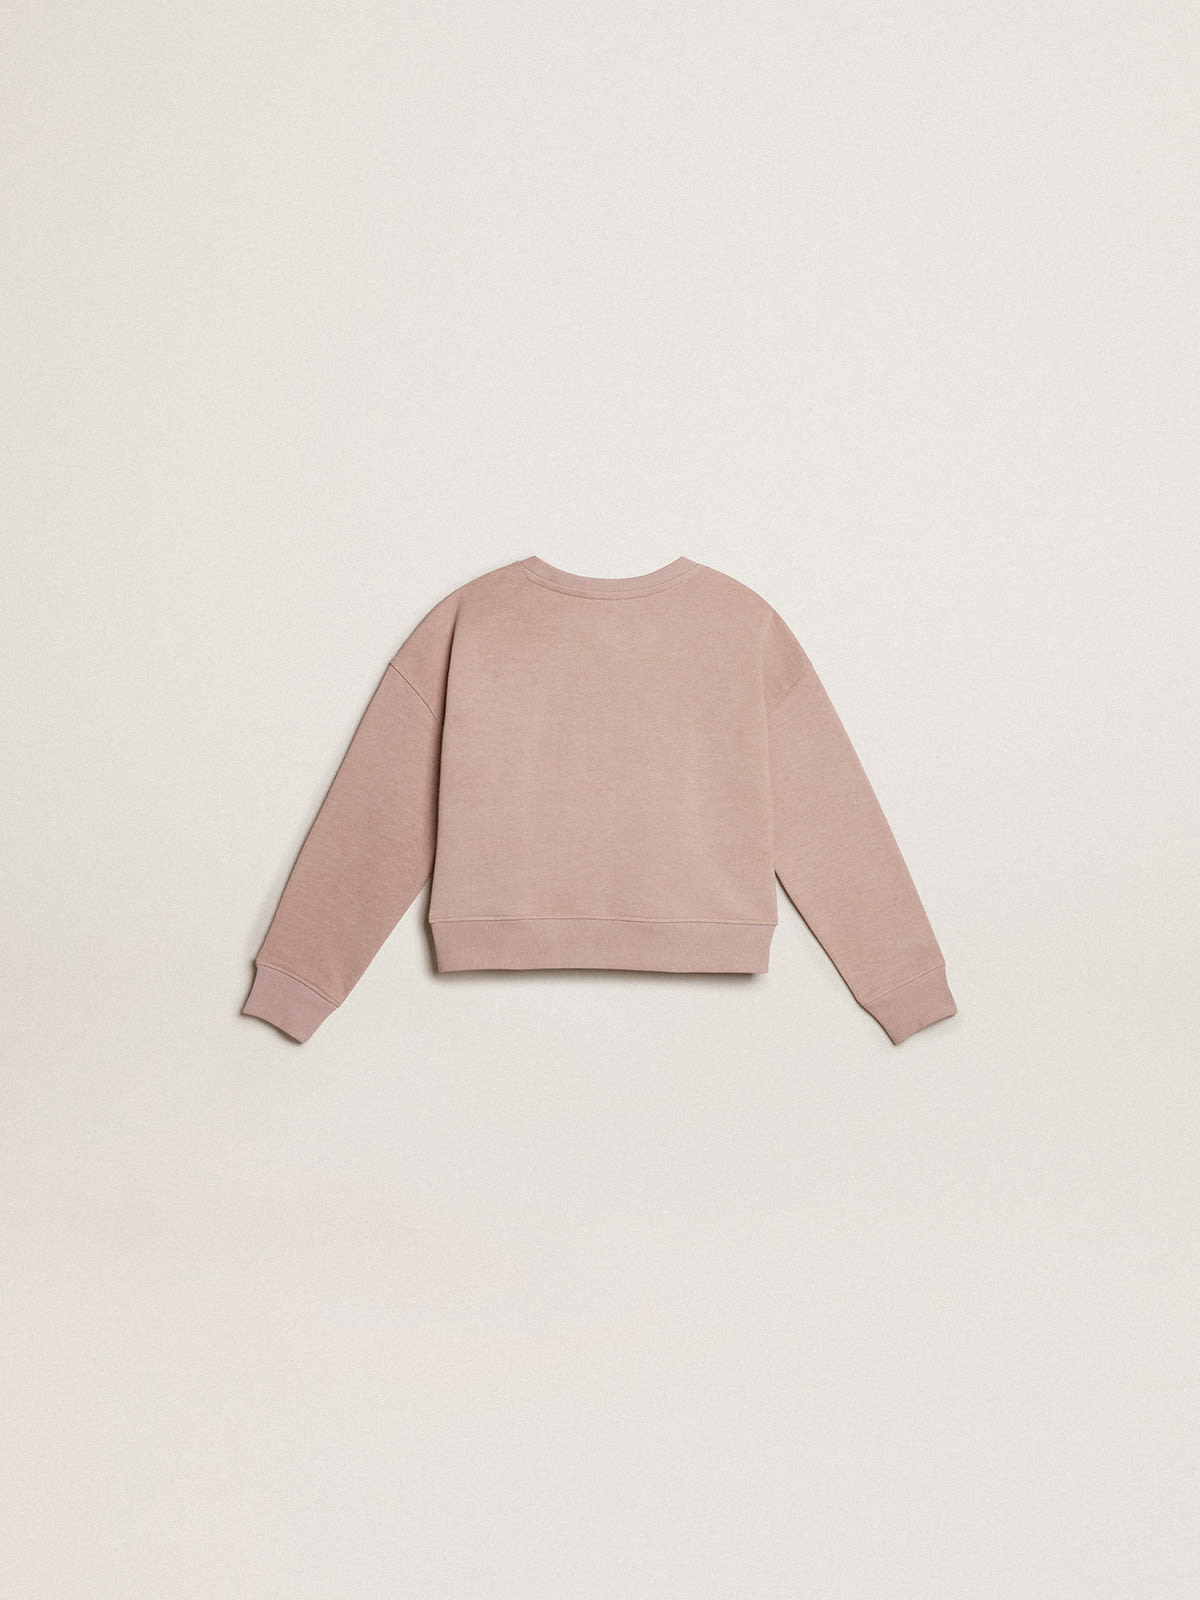 Golden Goose - Cropped sweatshirt in pink cotton with toile de jouy print  in 